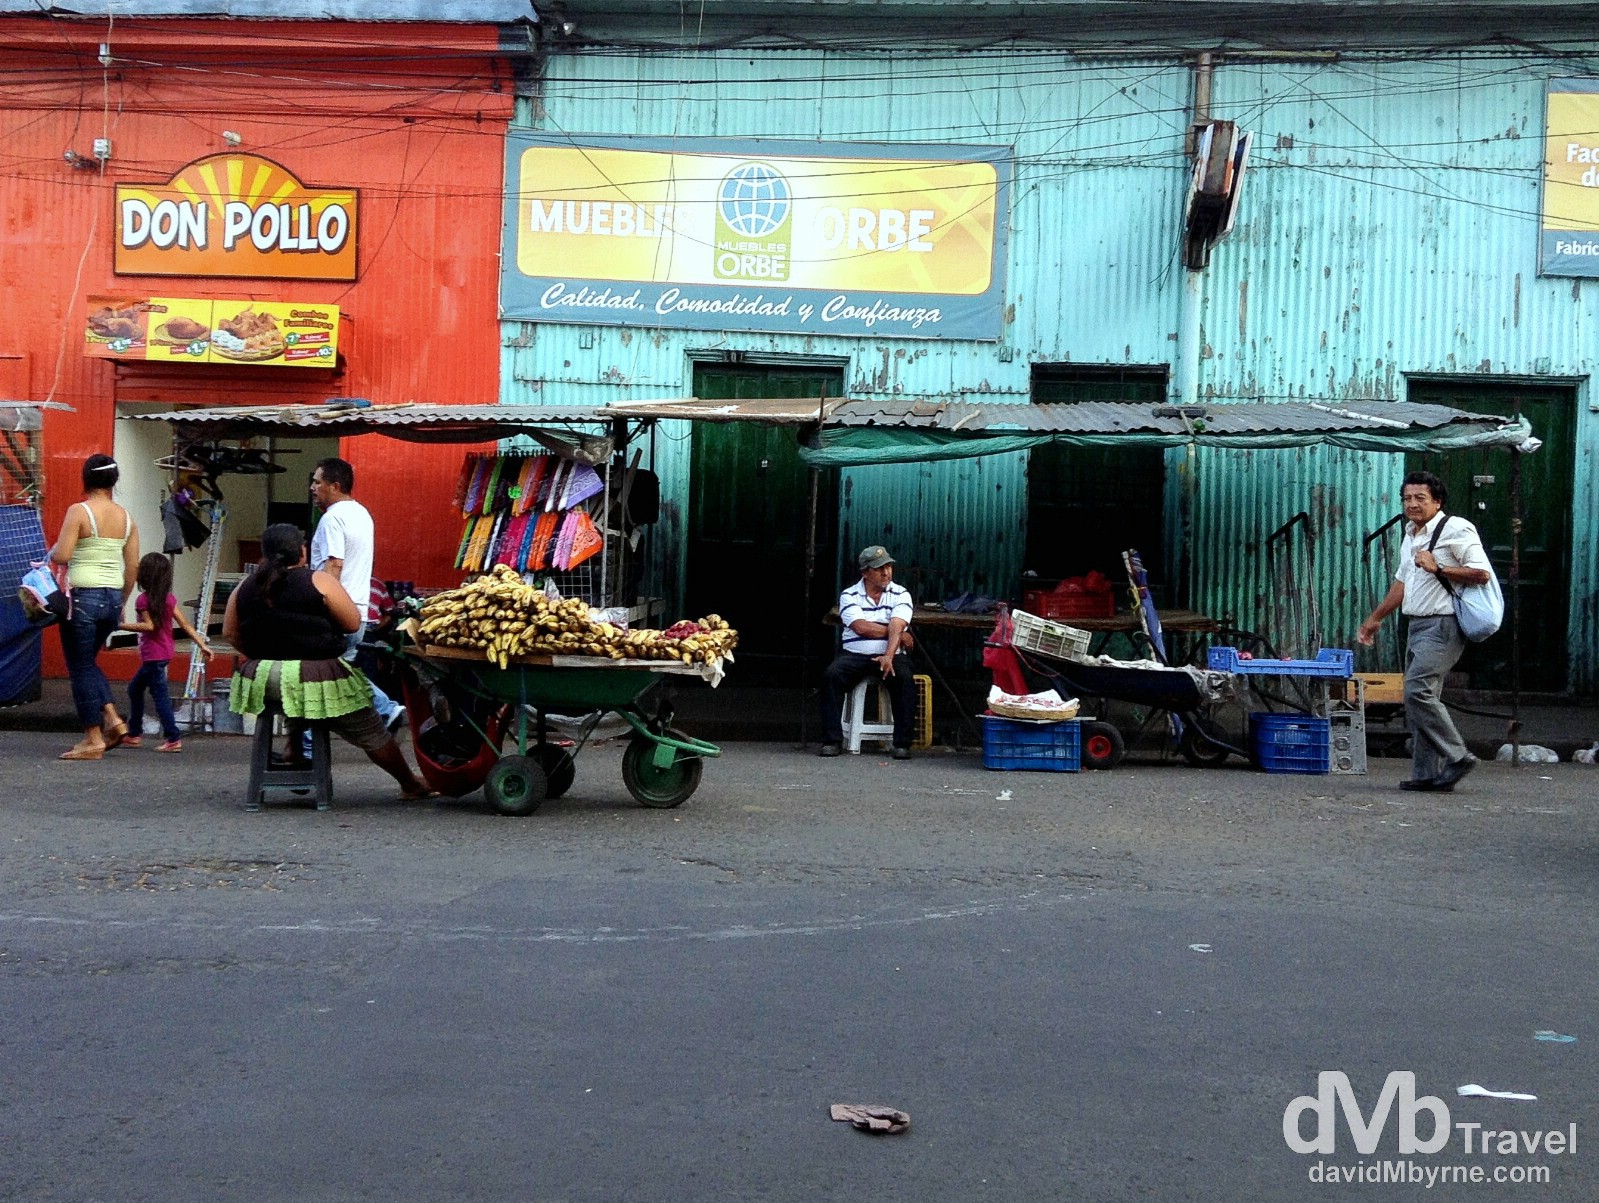 On the streets of San Salvador, El Salvador, Central America. June 2nd 2013 (iPod)